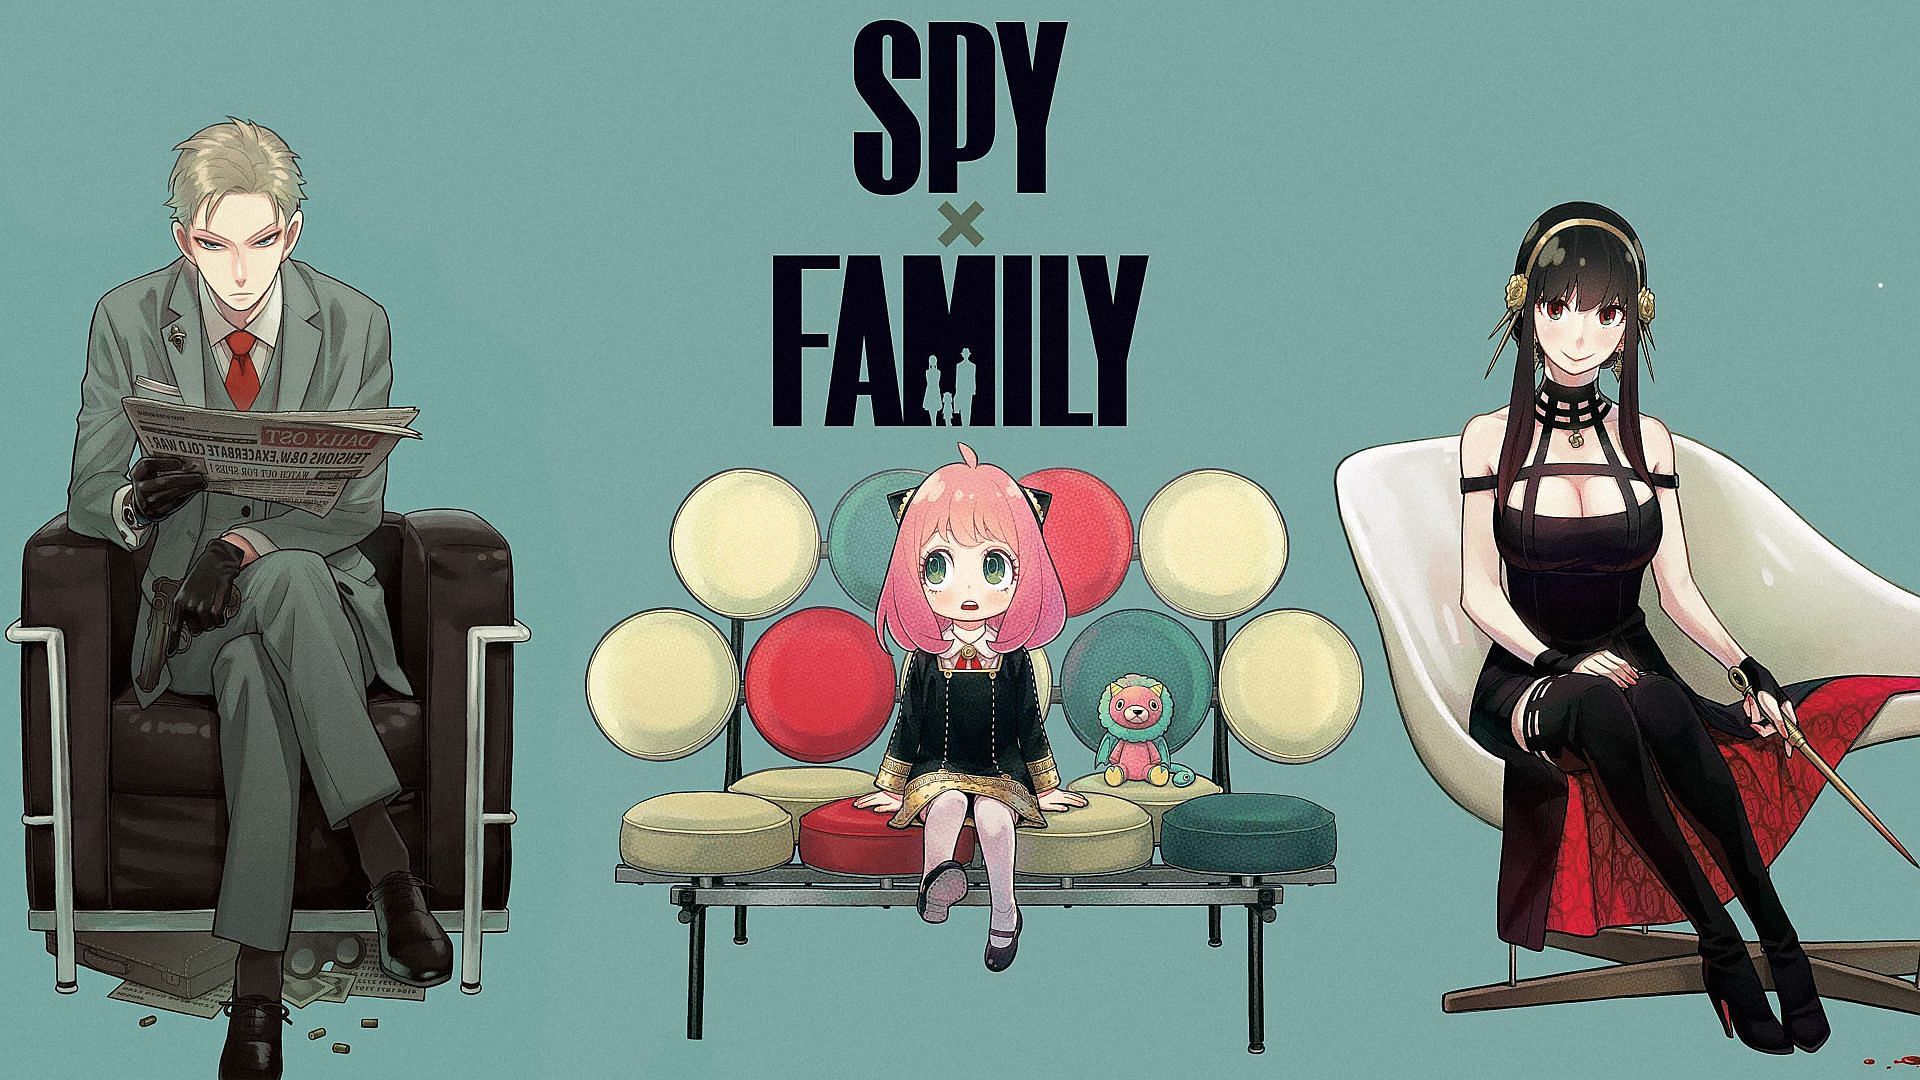 Anime spy x family anya cosplay costume uniform dress+Wig - Walmart.com